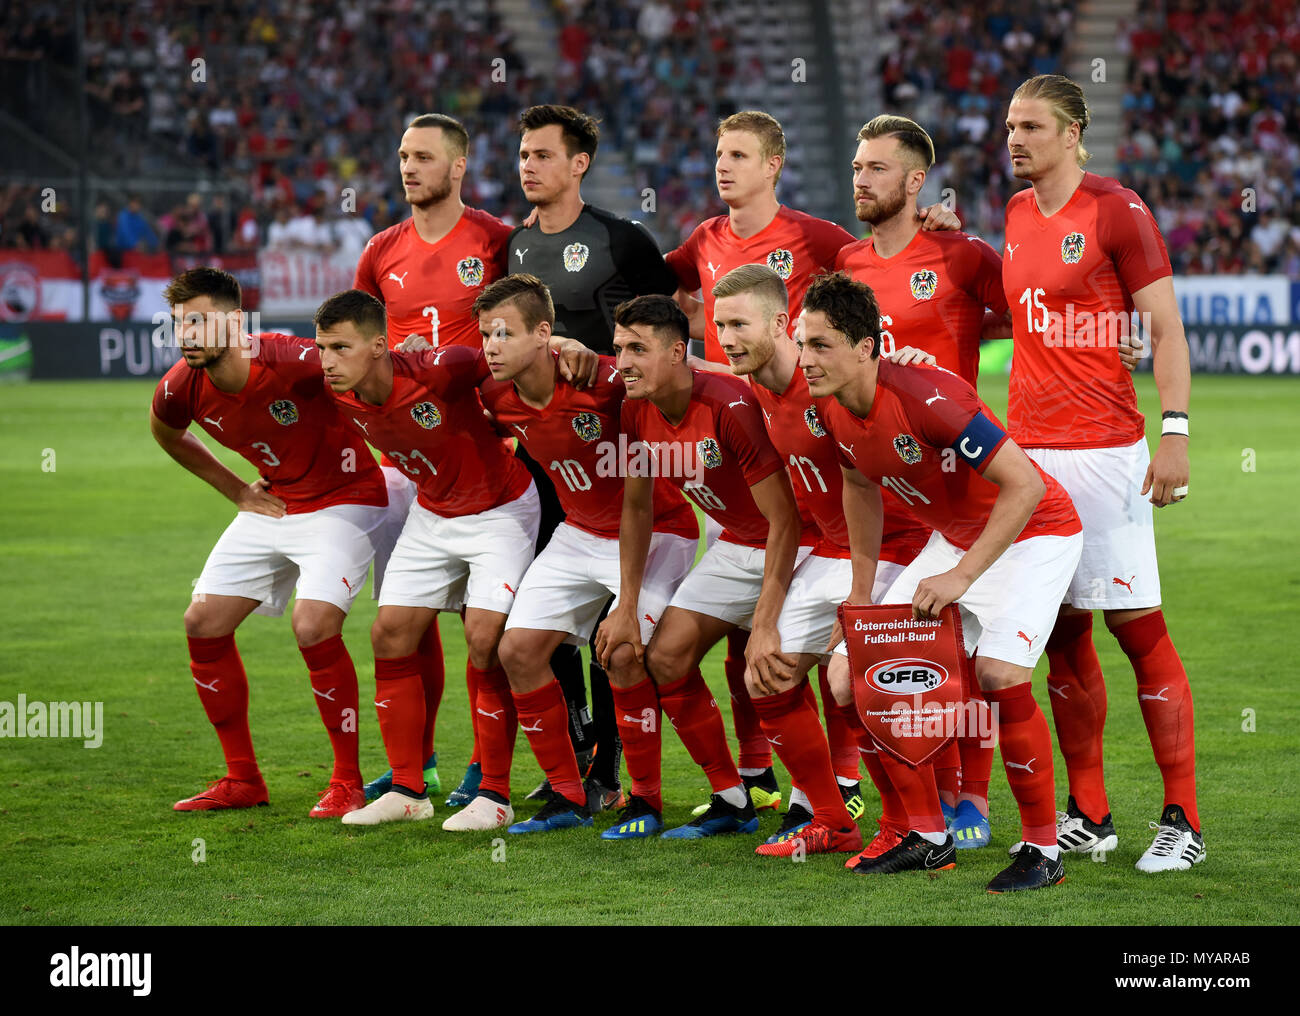 Innsbruck, Austria - May 30, 2018. National team of Austria before international friendly match against Russia at Tivoli stadium in Innsbruck. Stock Photo